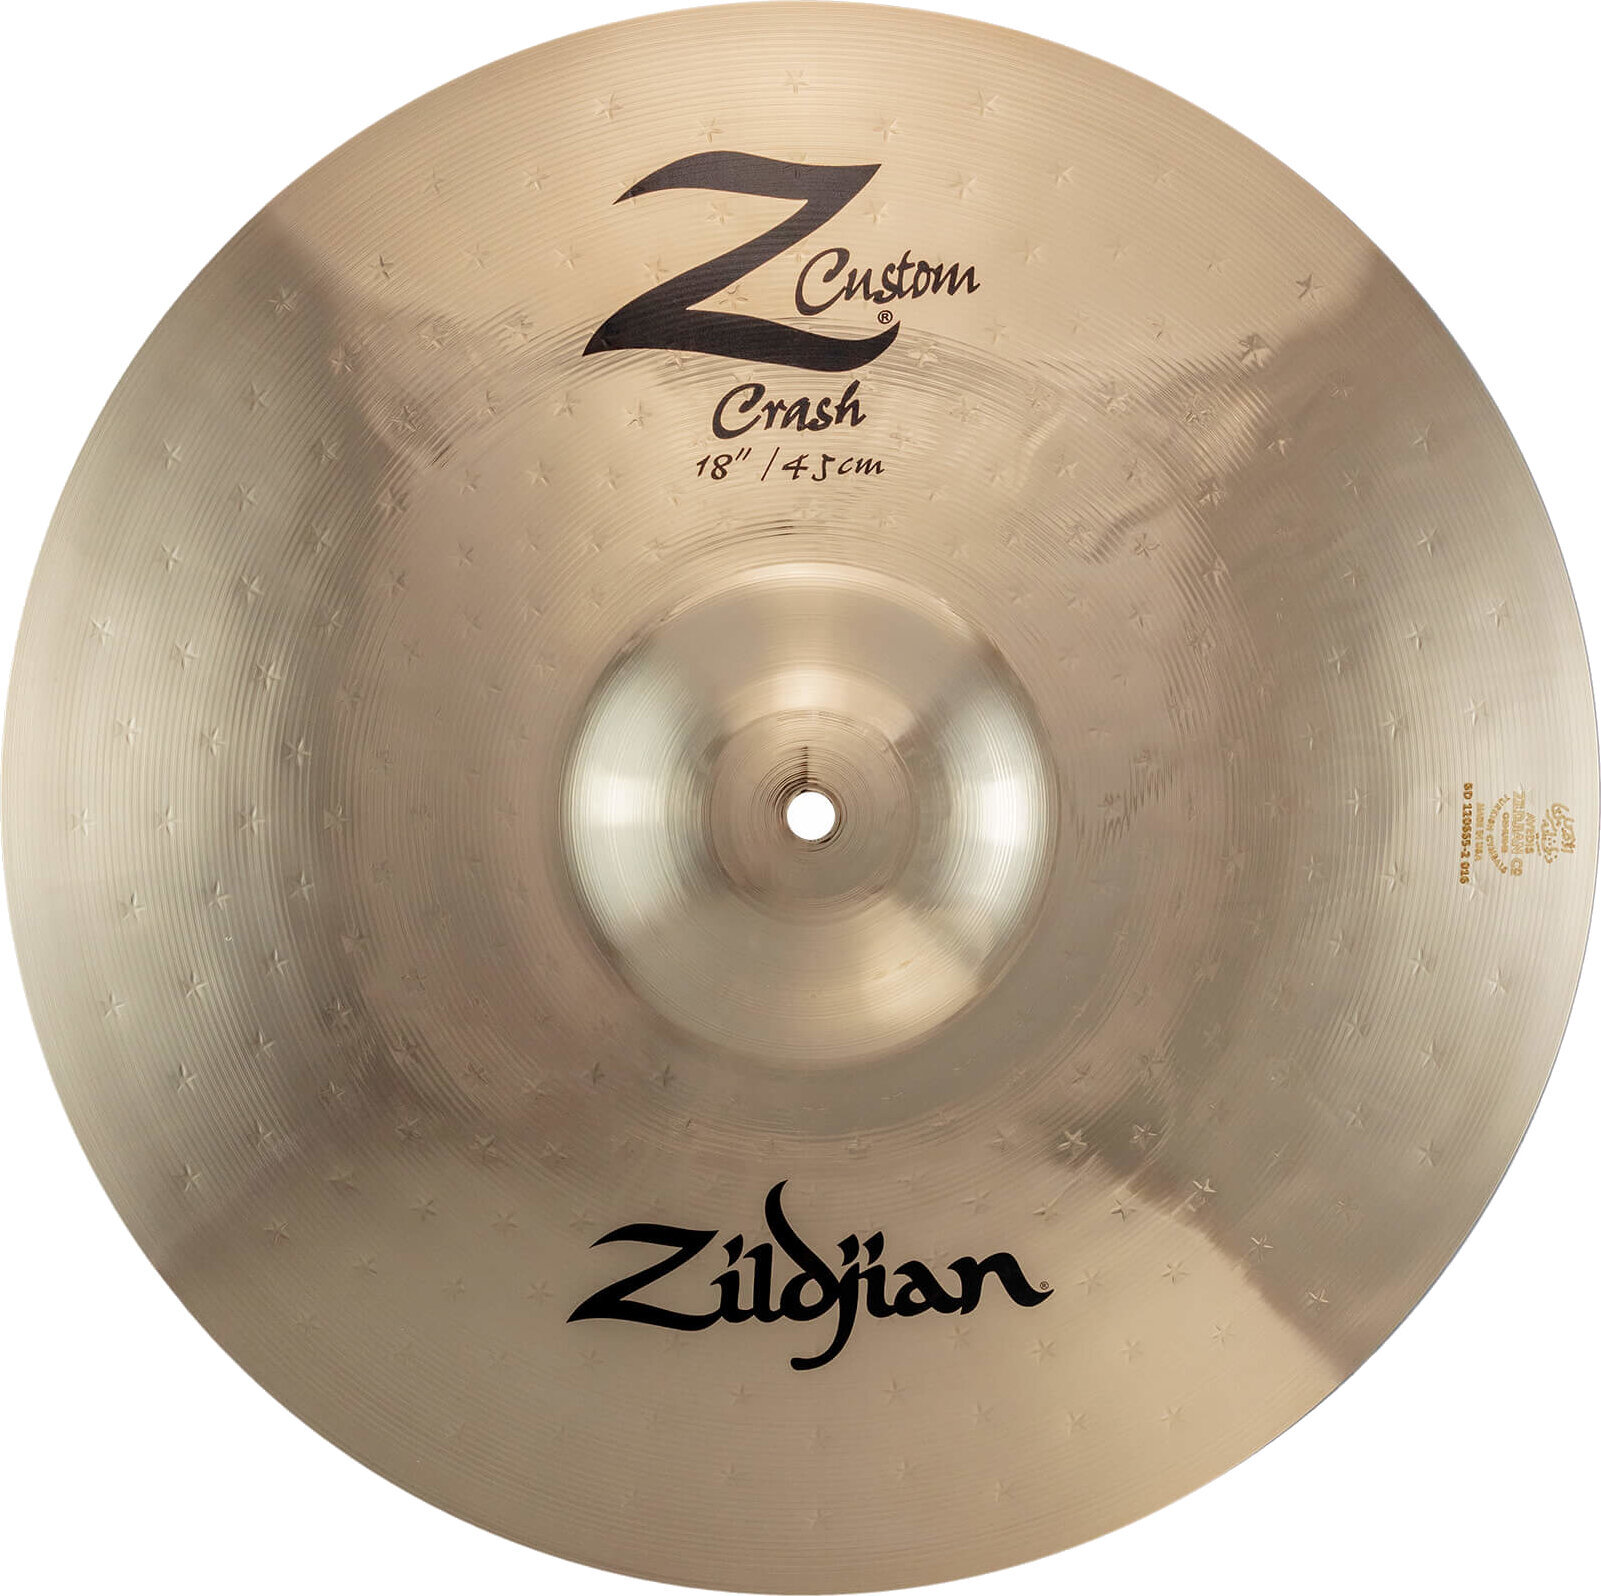 Crash Cymbal Zildjian Z Custom Crash Cymbal 18"